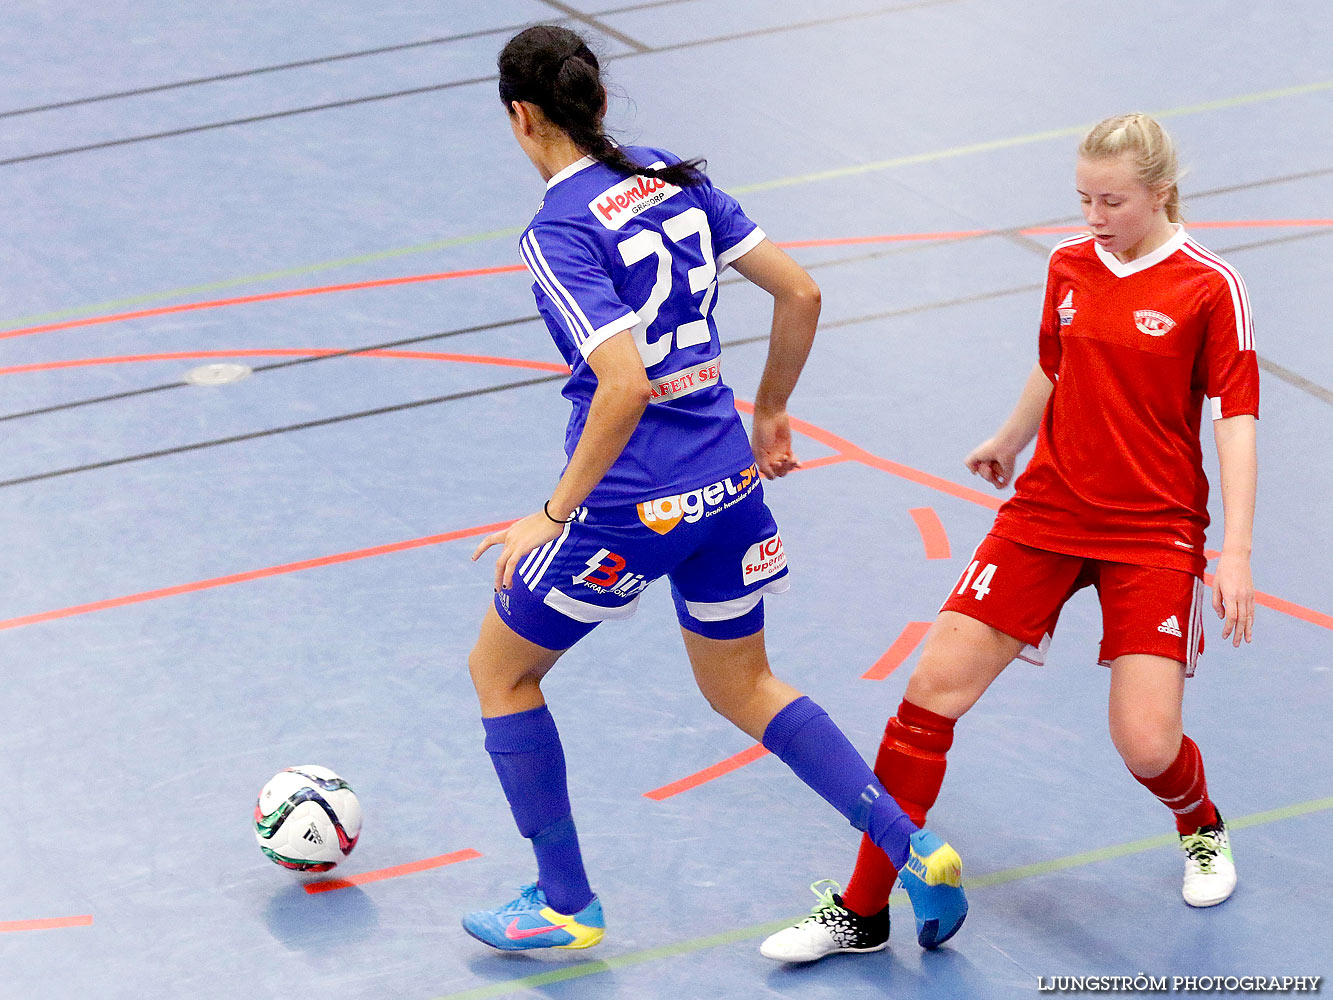 Futsal-DM IK Gauthiod-Bergdalens IK 4-0,dam,Åse-Vistehallen,Grästorp,Sverige,Futsal,,2015,127775